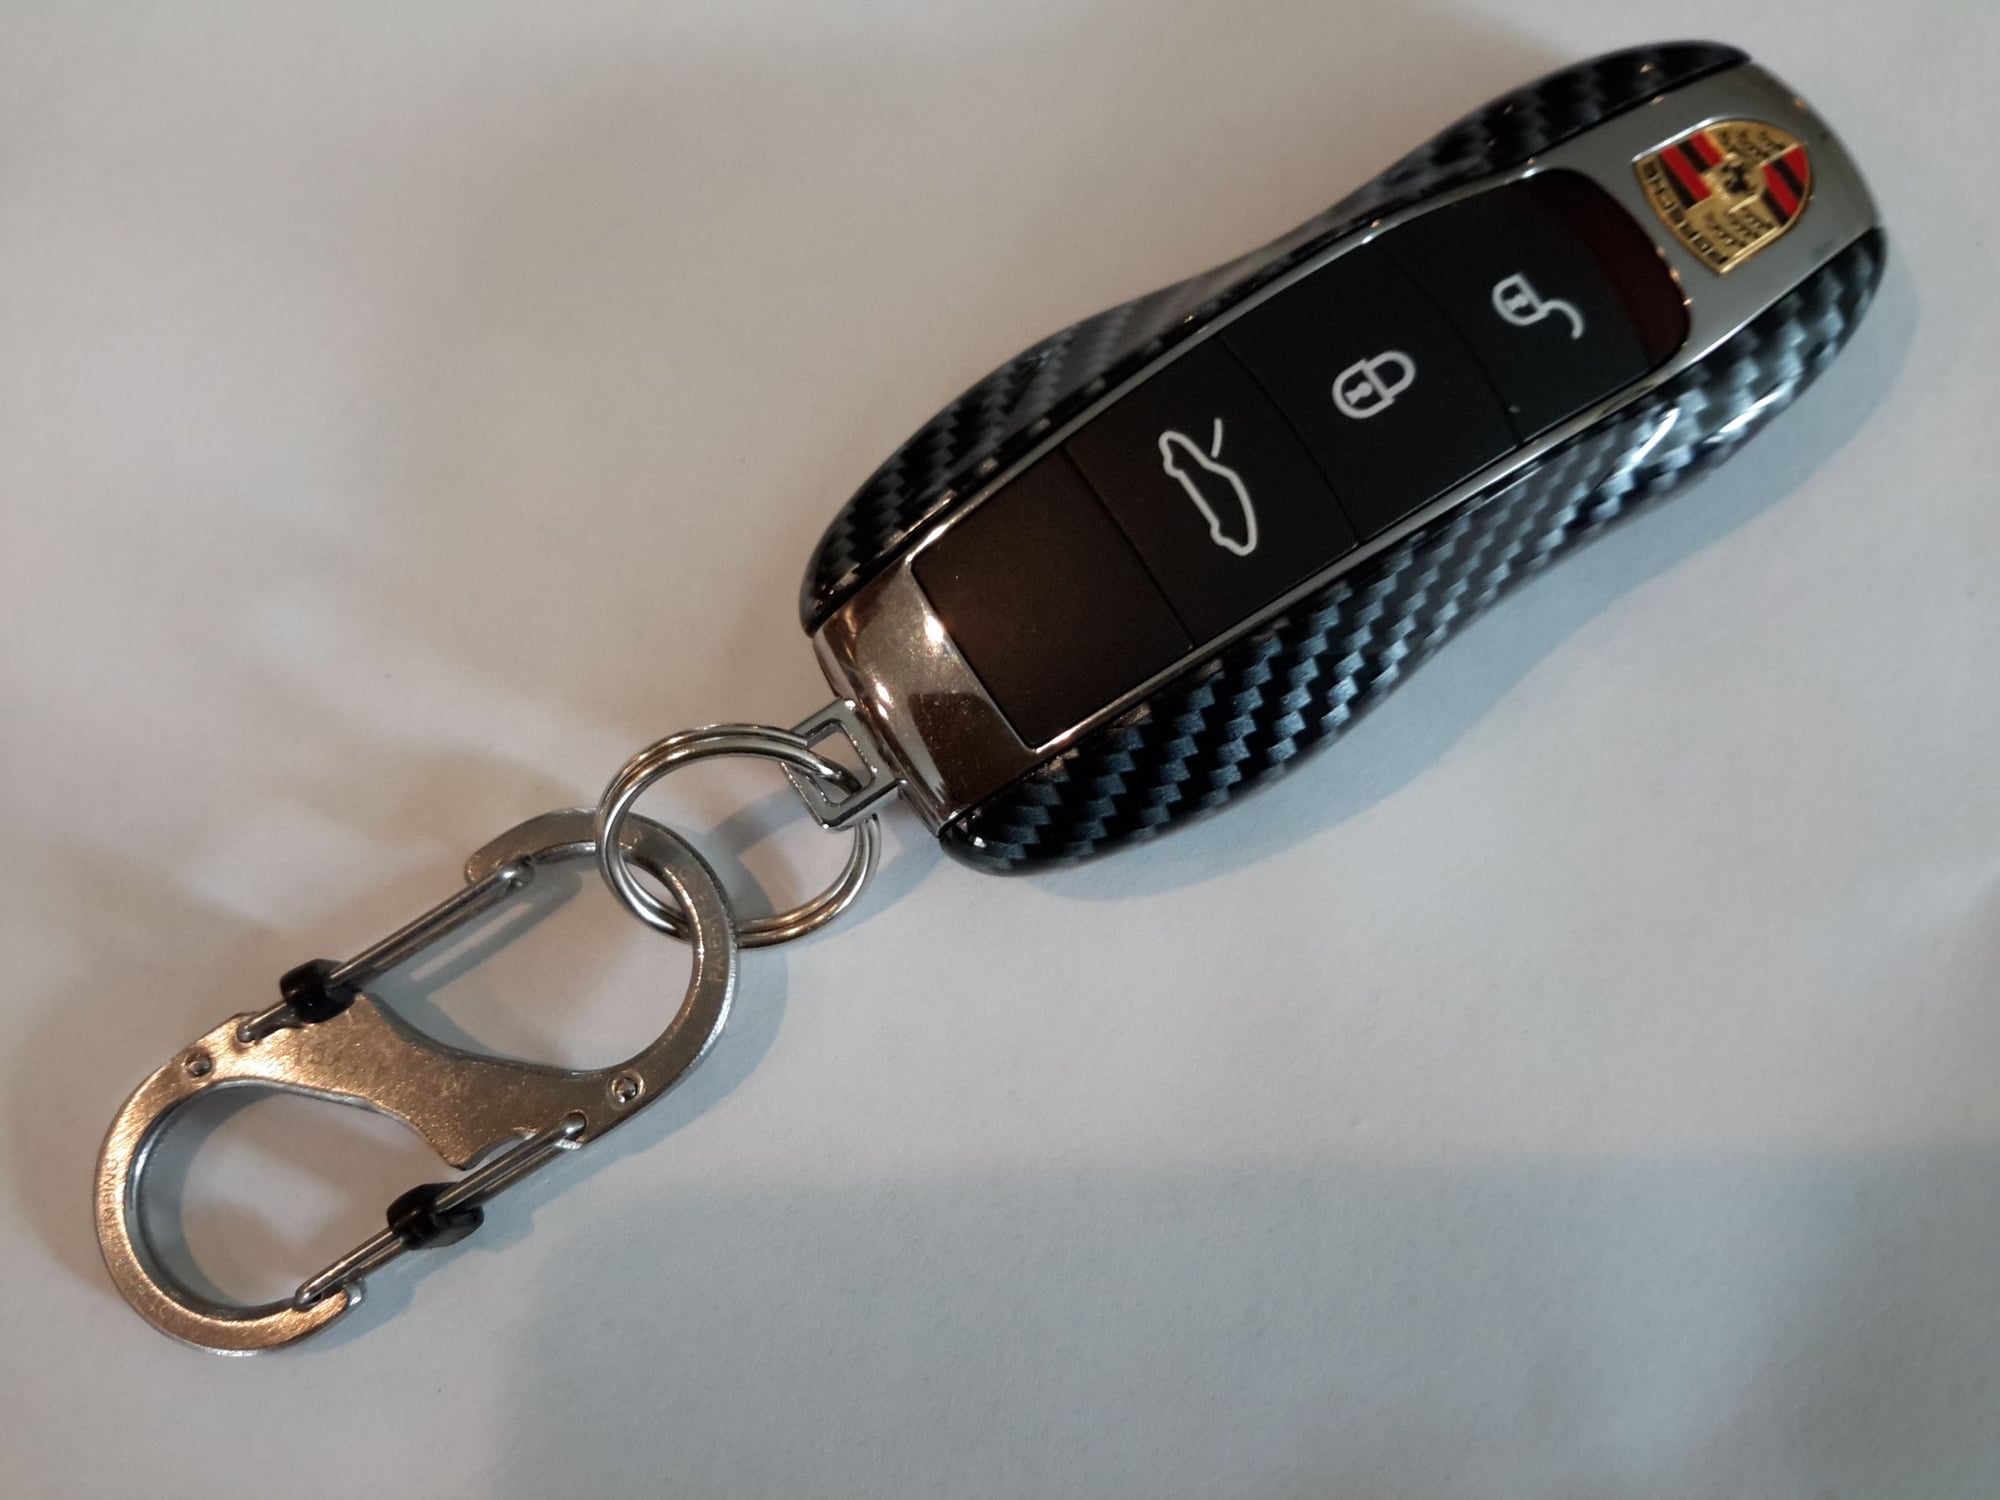 Premium leather key cover for Porsche keys incl. keyring hook +